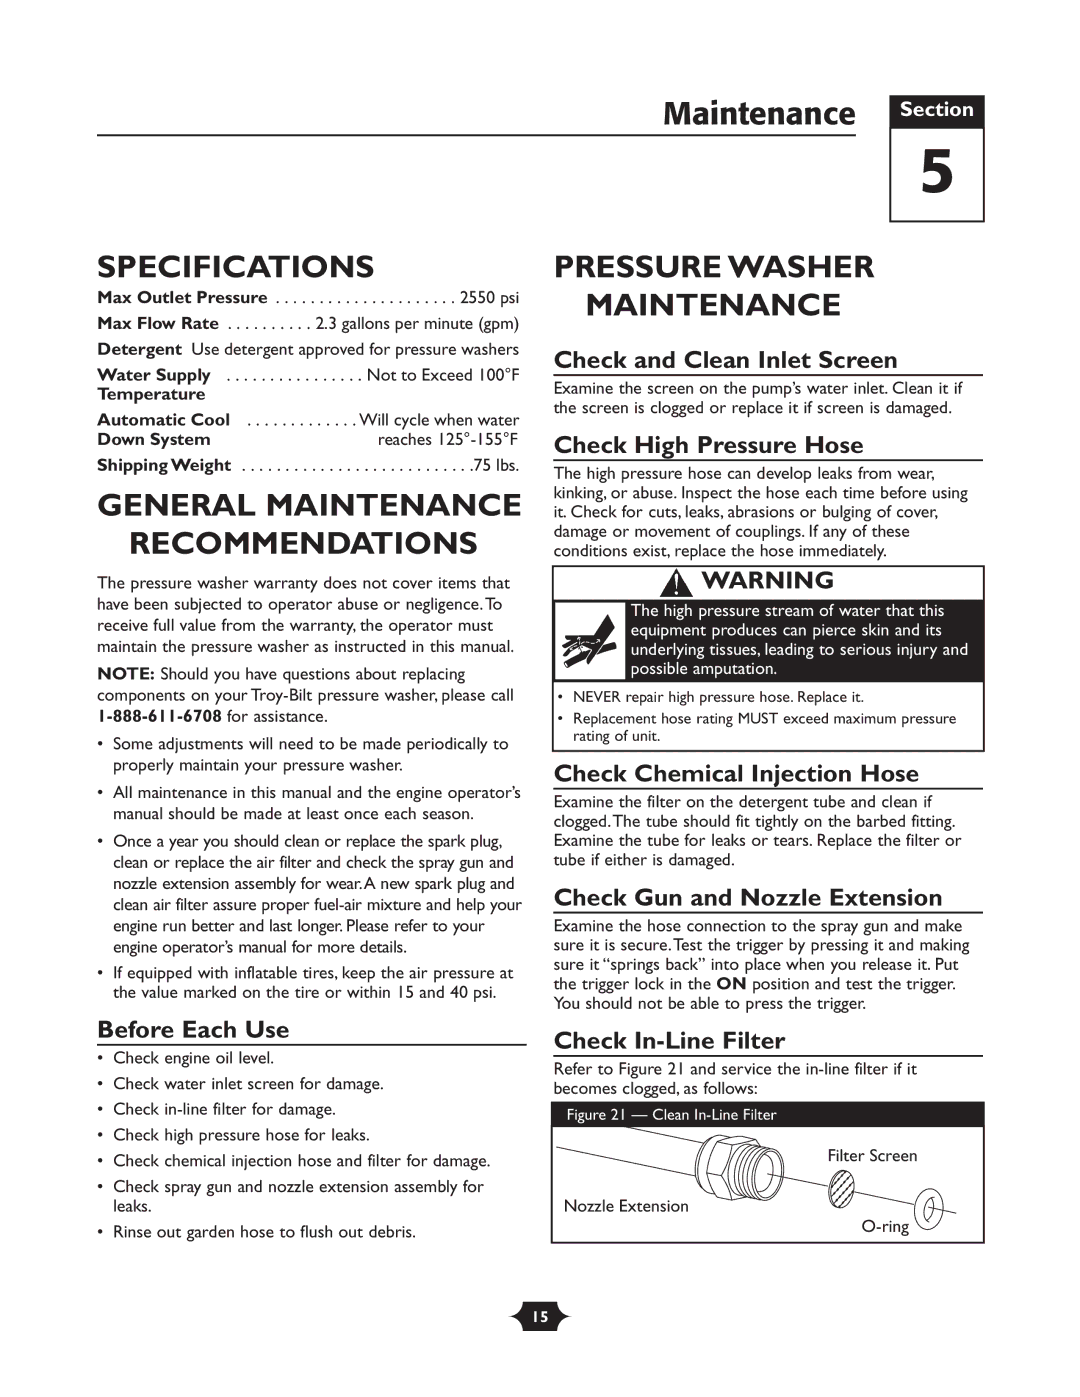 Troy-Bilt 20240 Maintenance Section, Specifications, General Maintenance Recommendations, Pressure Washer Maintenance 